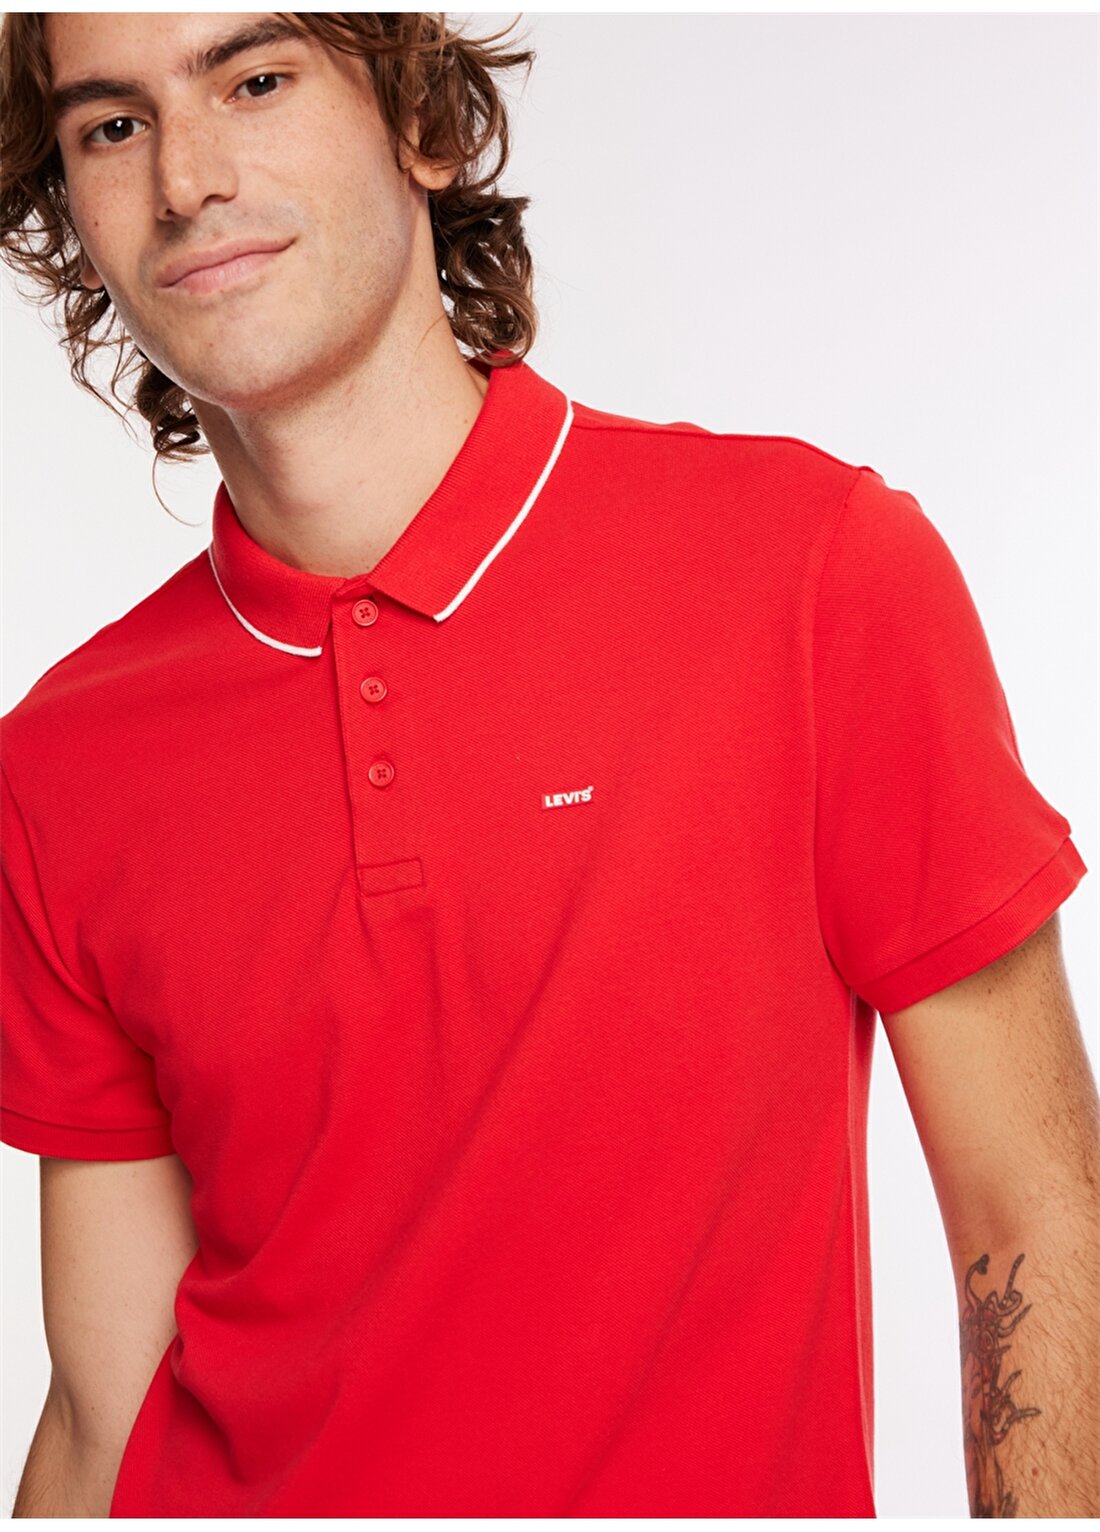 Levis Düz Kırmızı Erkek Polo T-Shirt A1383-0093_BNG BASIC2 POLO RED POLO